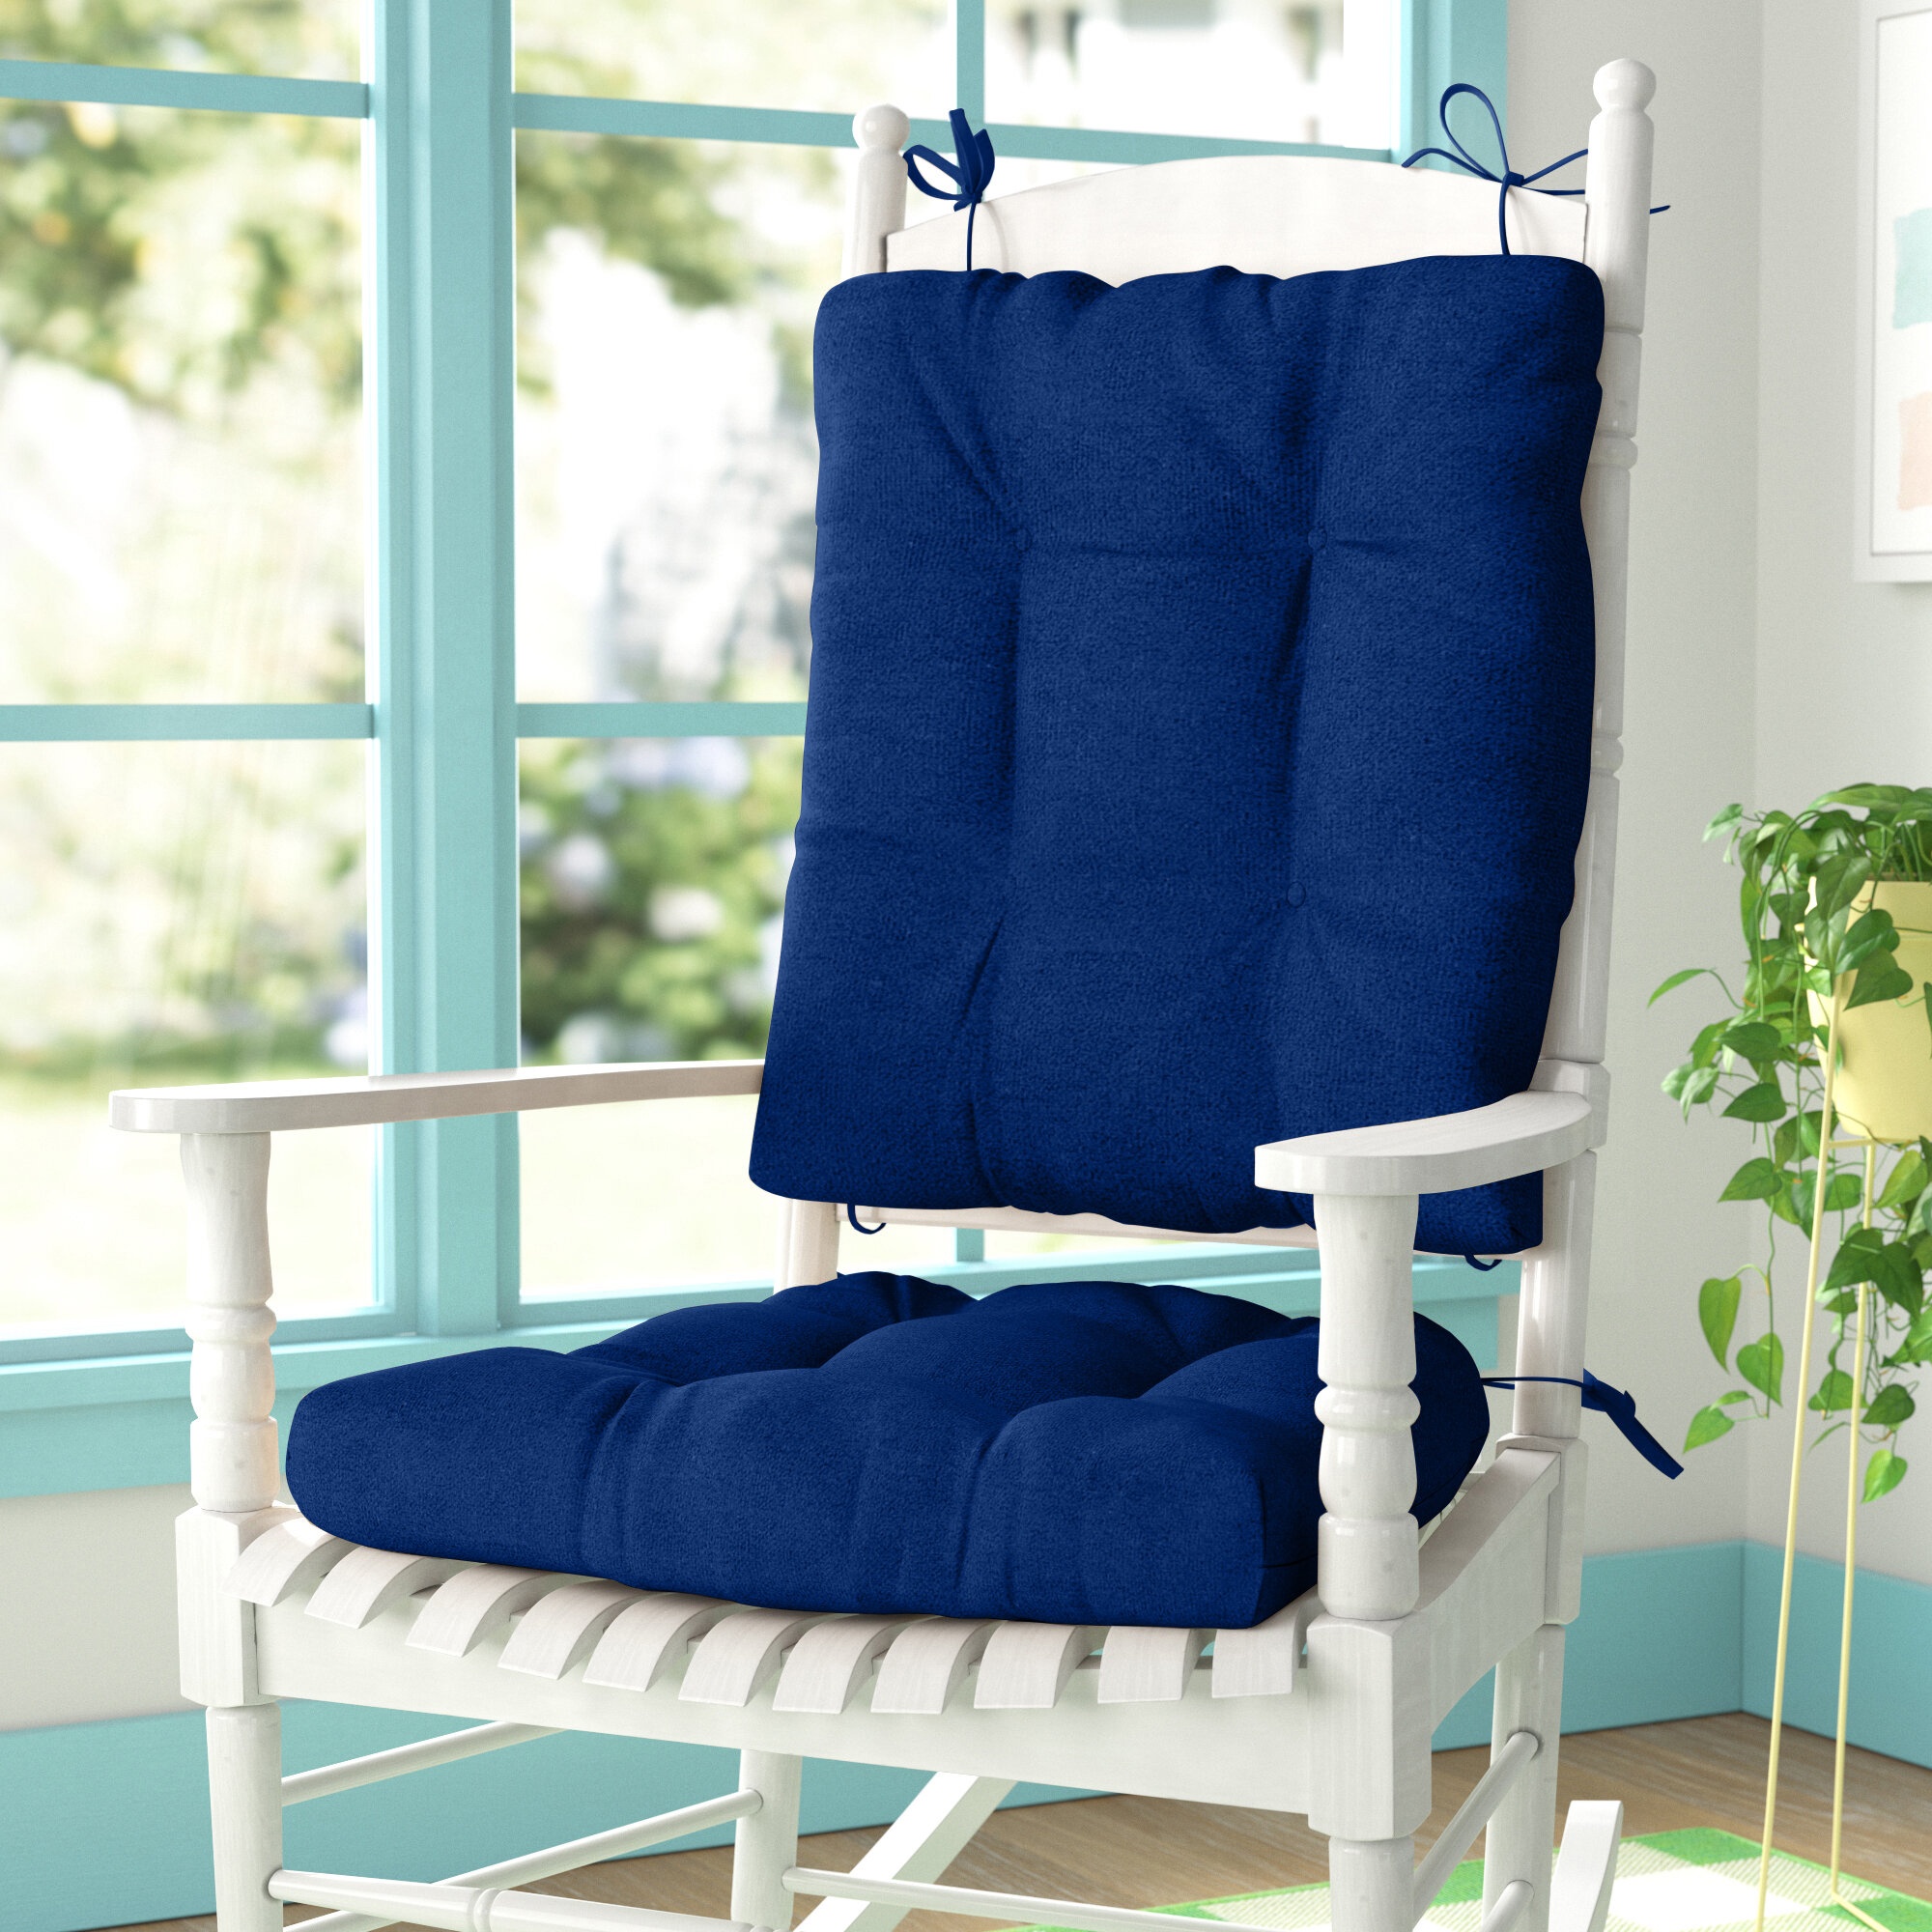 https://visualhunt.com/photos/23/wayfair-basics-r-indoor-outdoor-seat-back-cushion.jpg